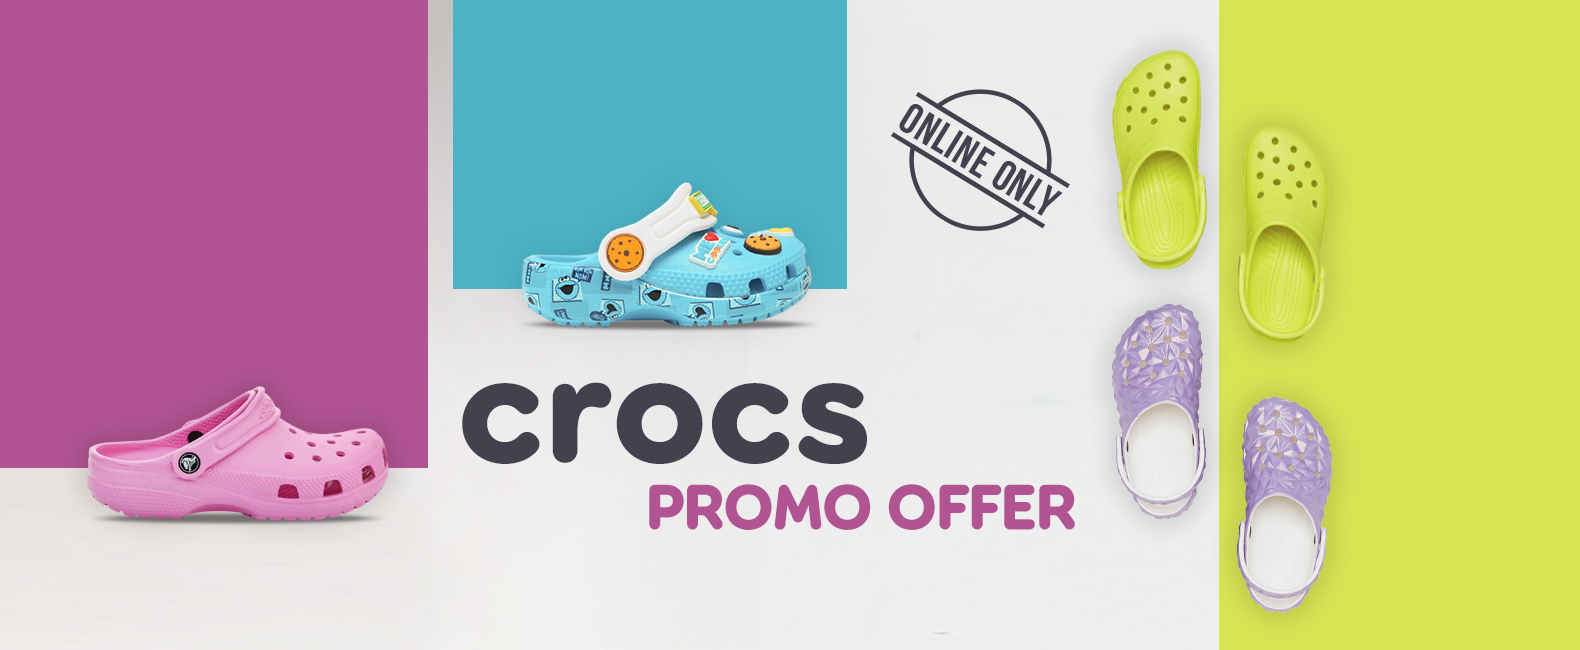 Crocs promo offer